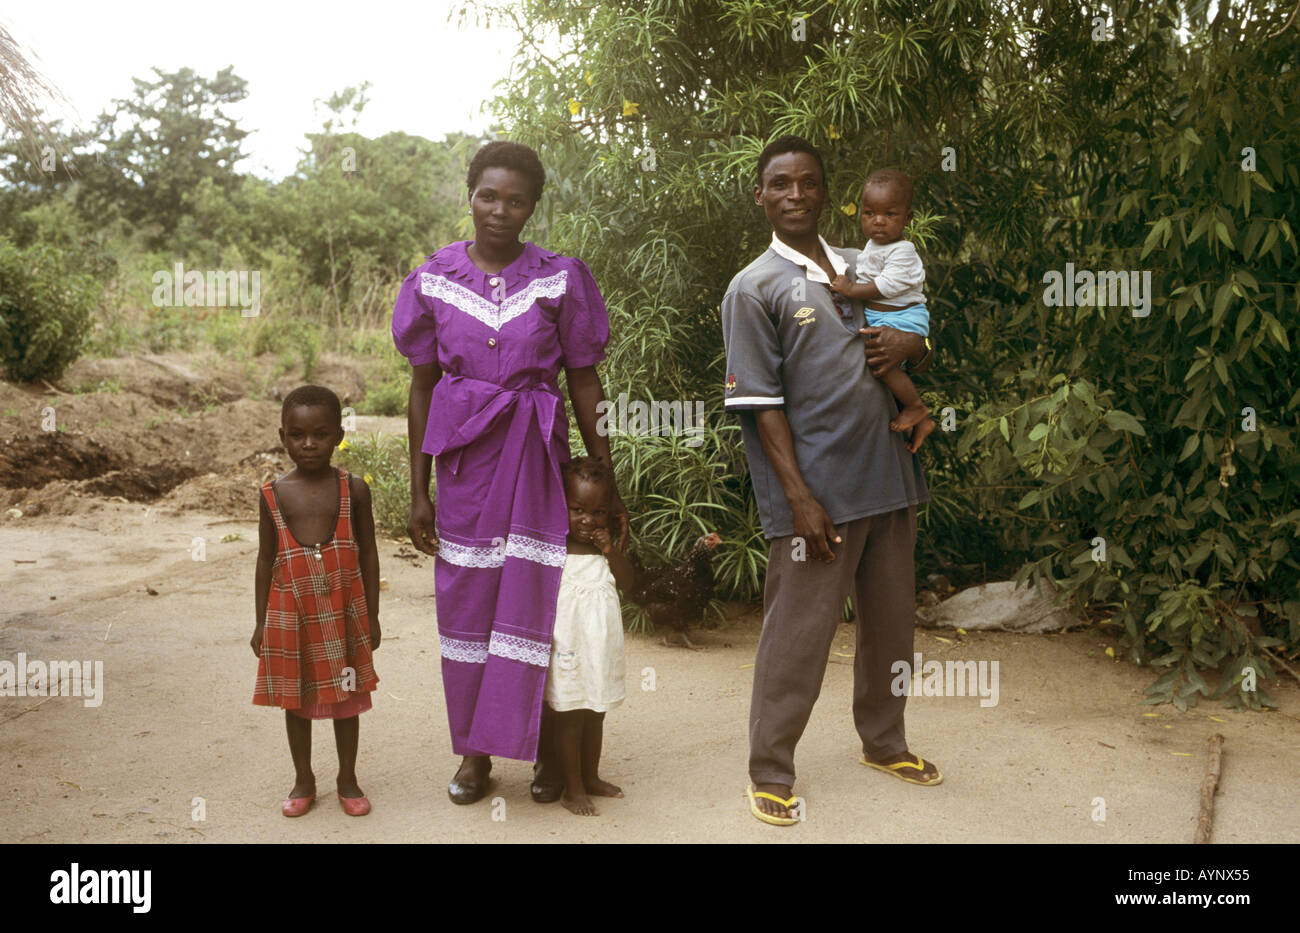 Family pose together for the camera in a typical village setting - Nkhotakota, Lake Malawi, Malawi Stock Photo